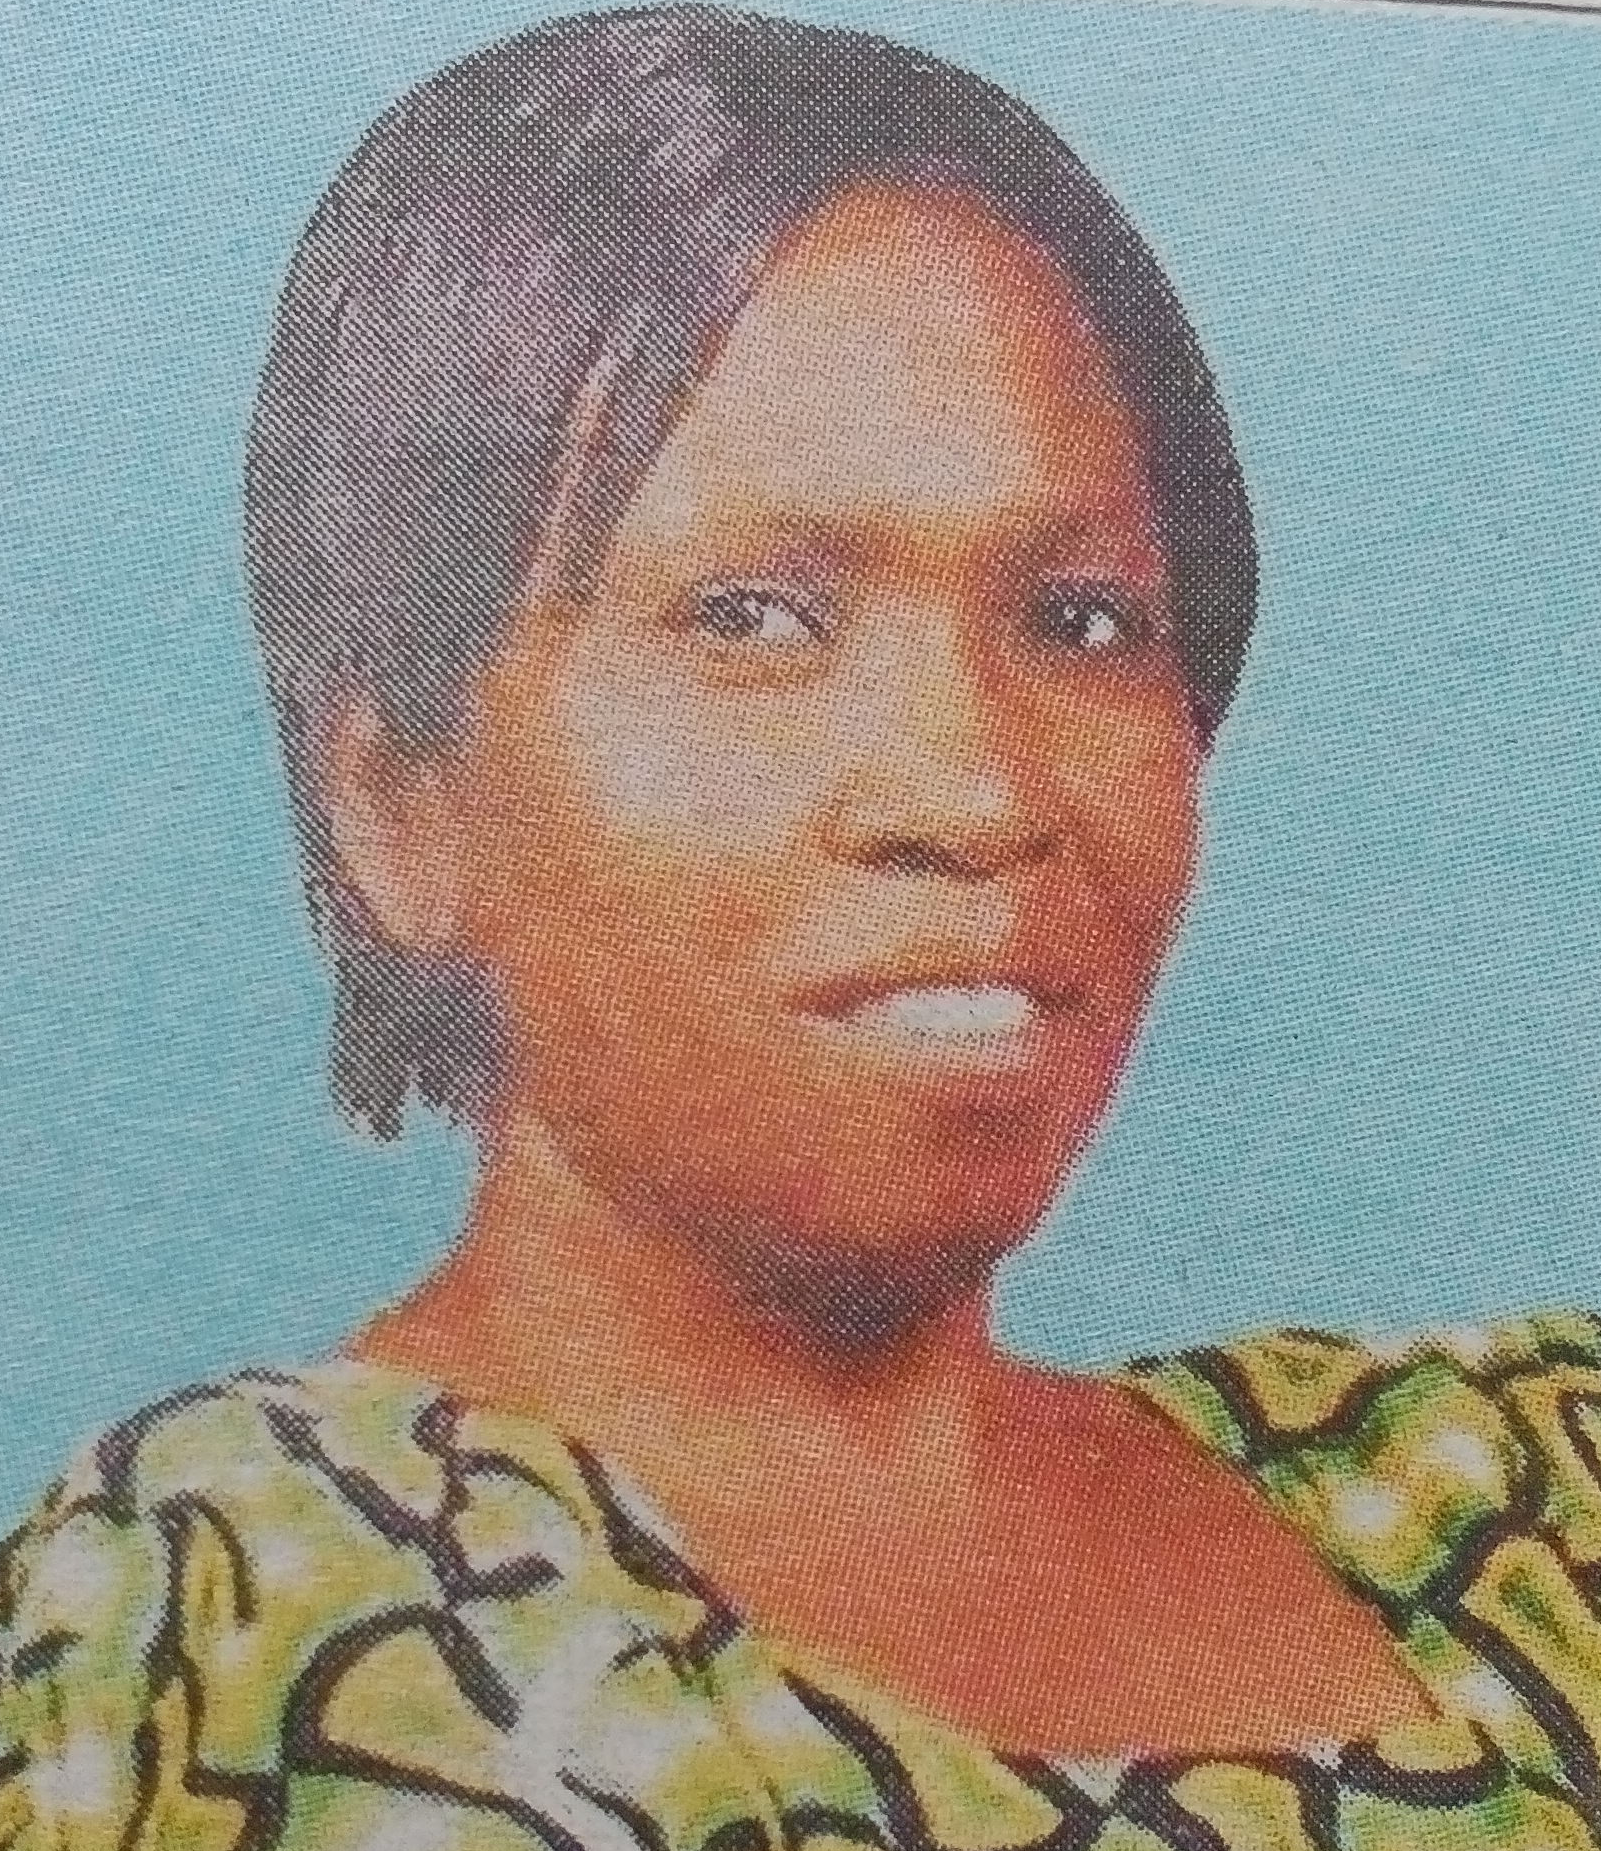 Obituary Image of Veronica Awuor Ayieko